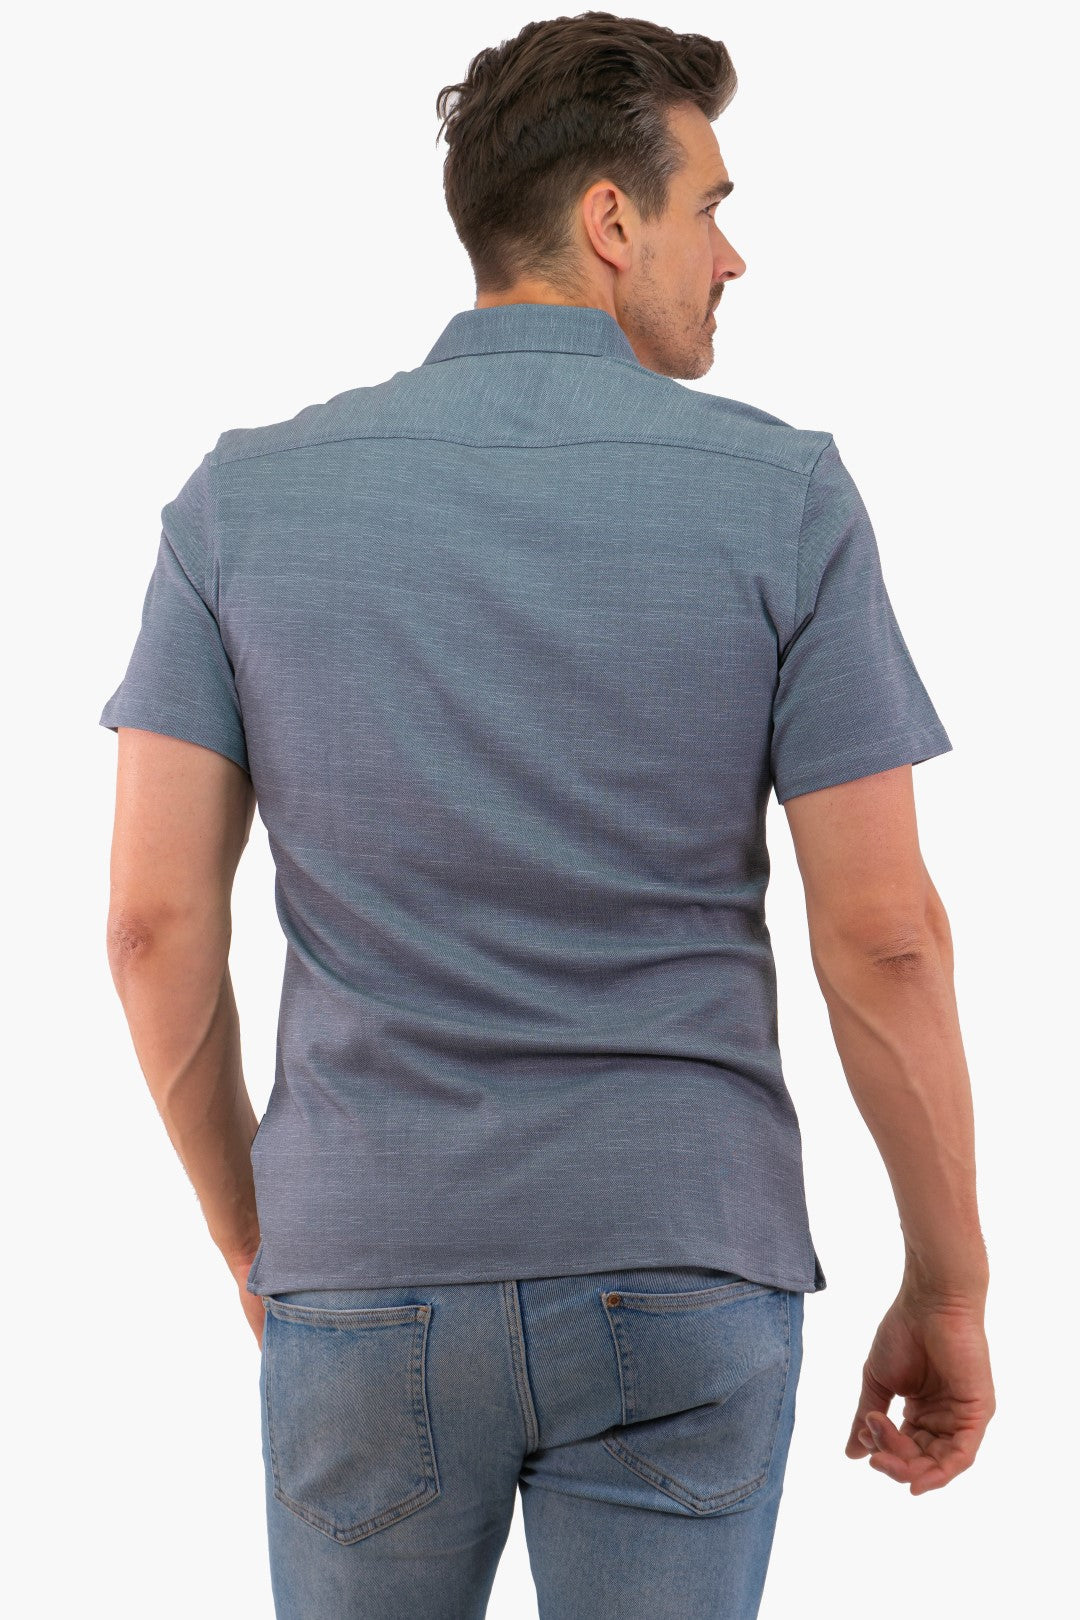 Hörst Short Sleeve Shirt in Navy color (Off-Hrss241750-401)